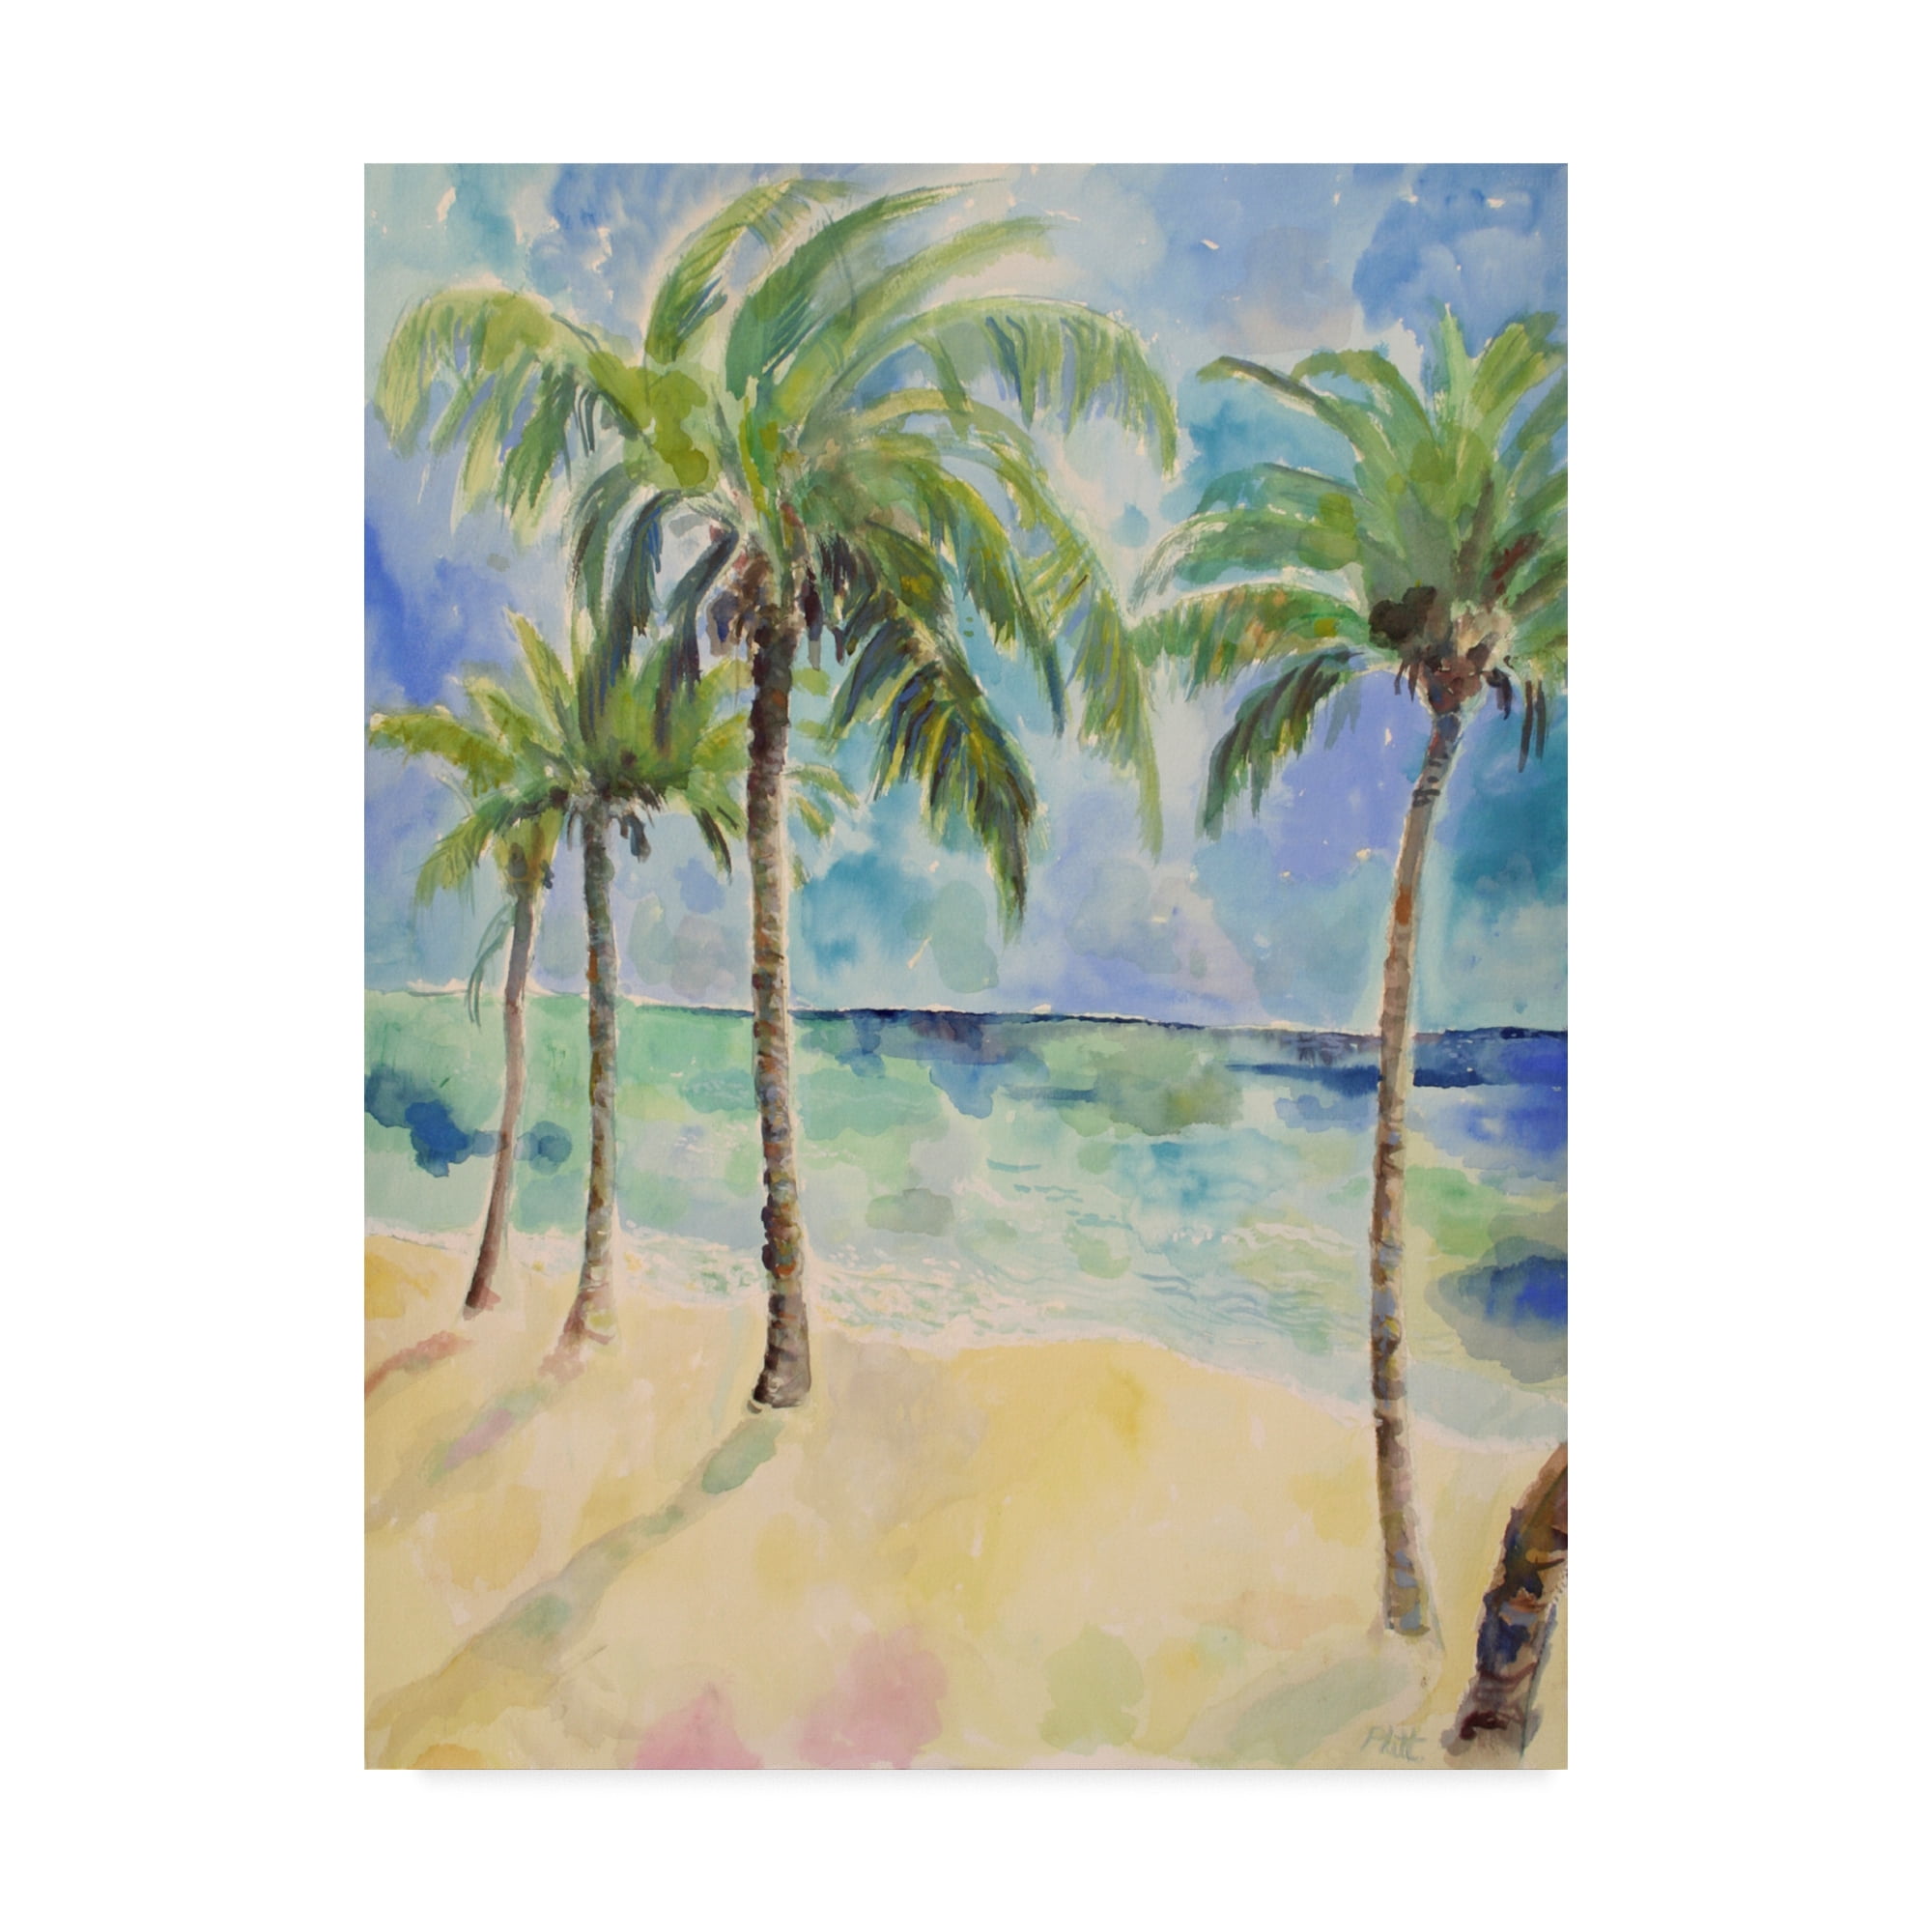 California lighhouse original watercolor painting gift idea palm trees tropical beach sea sunset coastal landscape ocean wall art